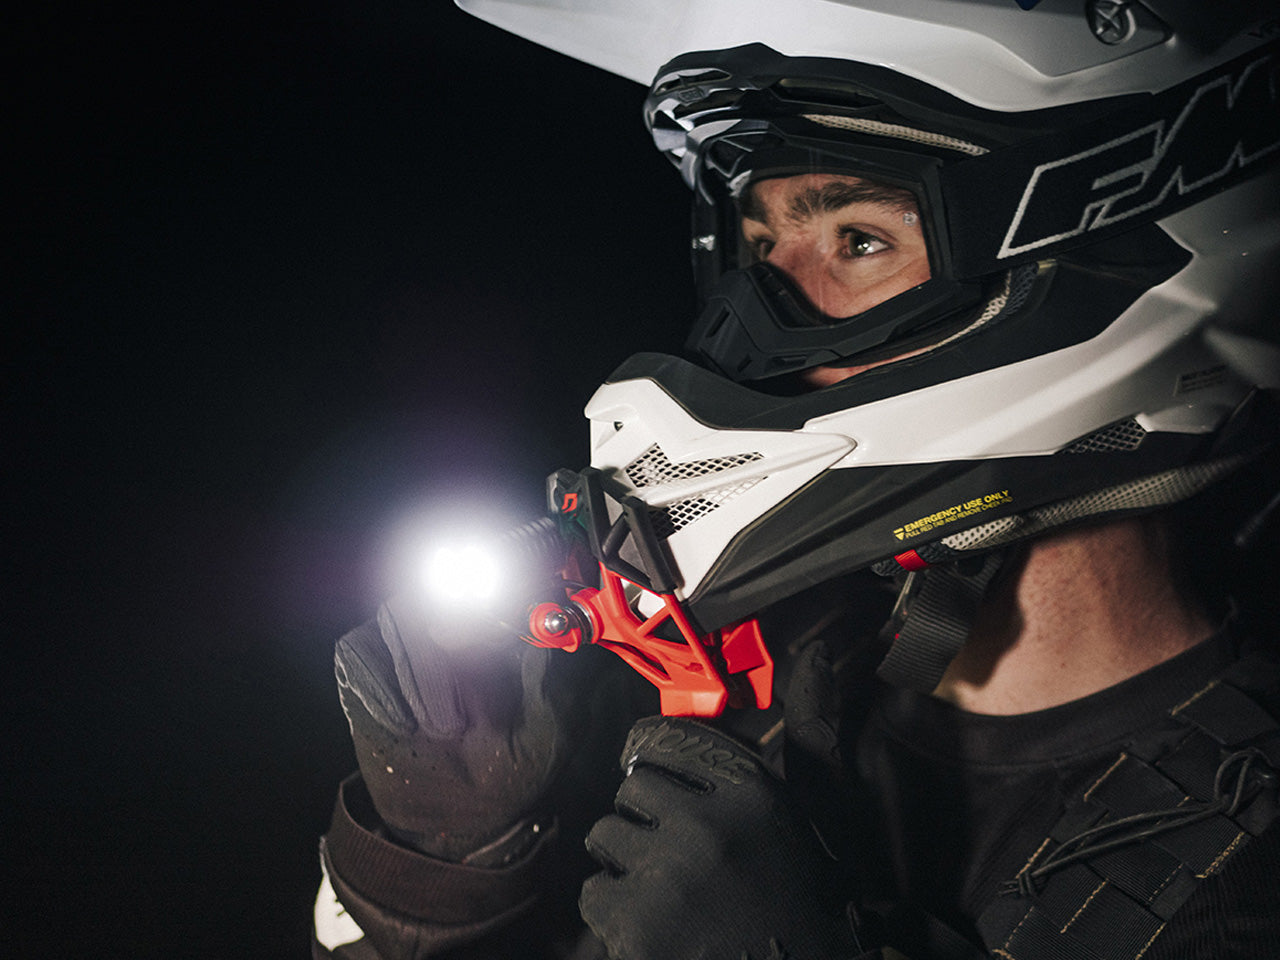 quickfire mini led light helmet motorcyclist